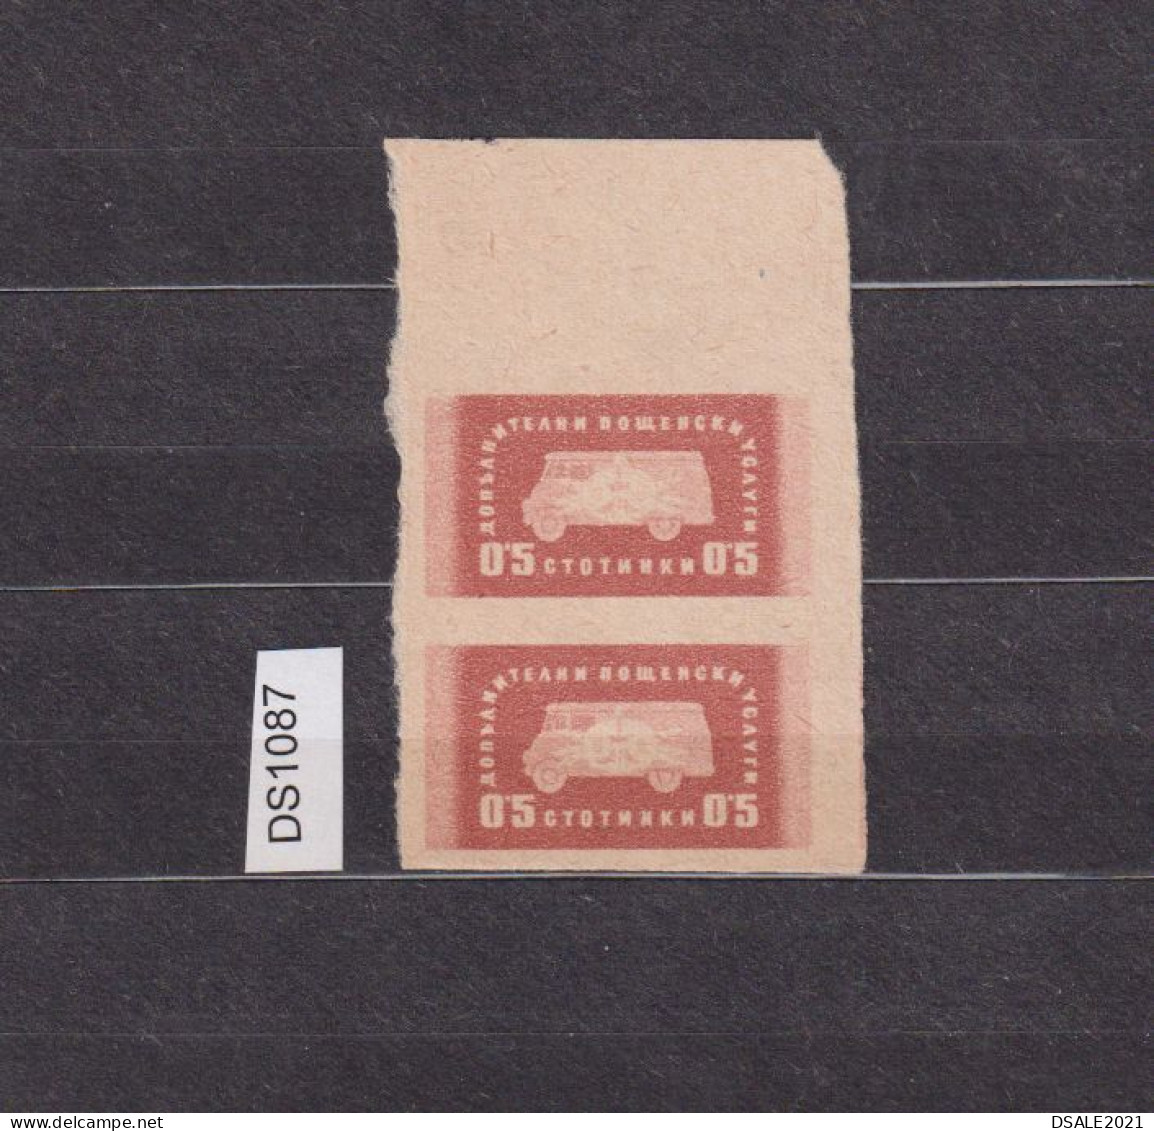 Bulgaria Bulgarie Bulgarien 1960s Additional Postal Service Fee Tax 2x0.50st. Stamps Pair Imperf. Unused NO GUM (ds1078) - Sellos De Servicio